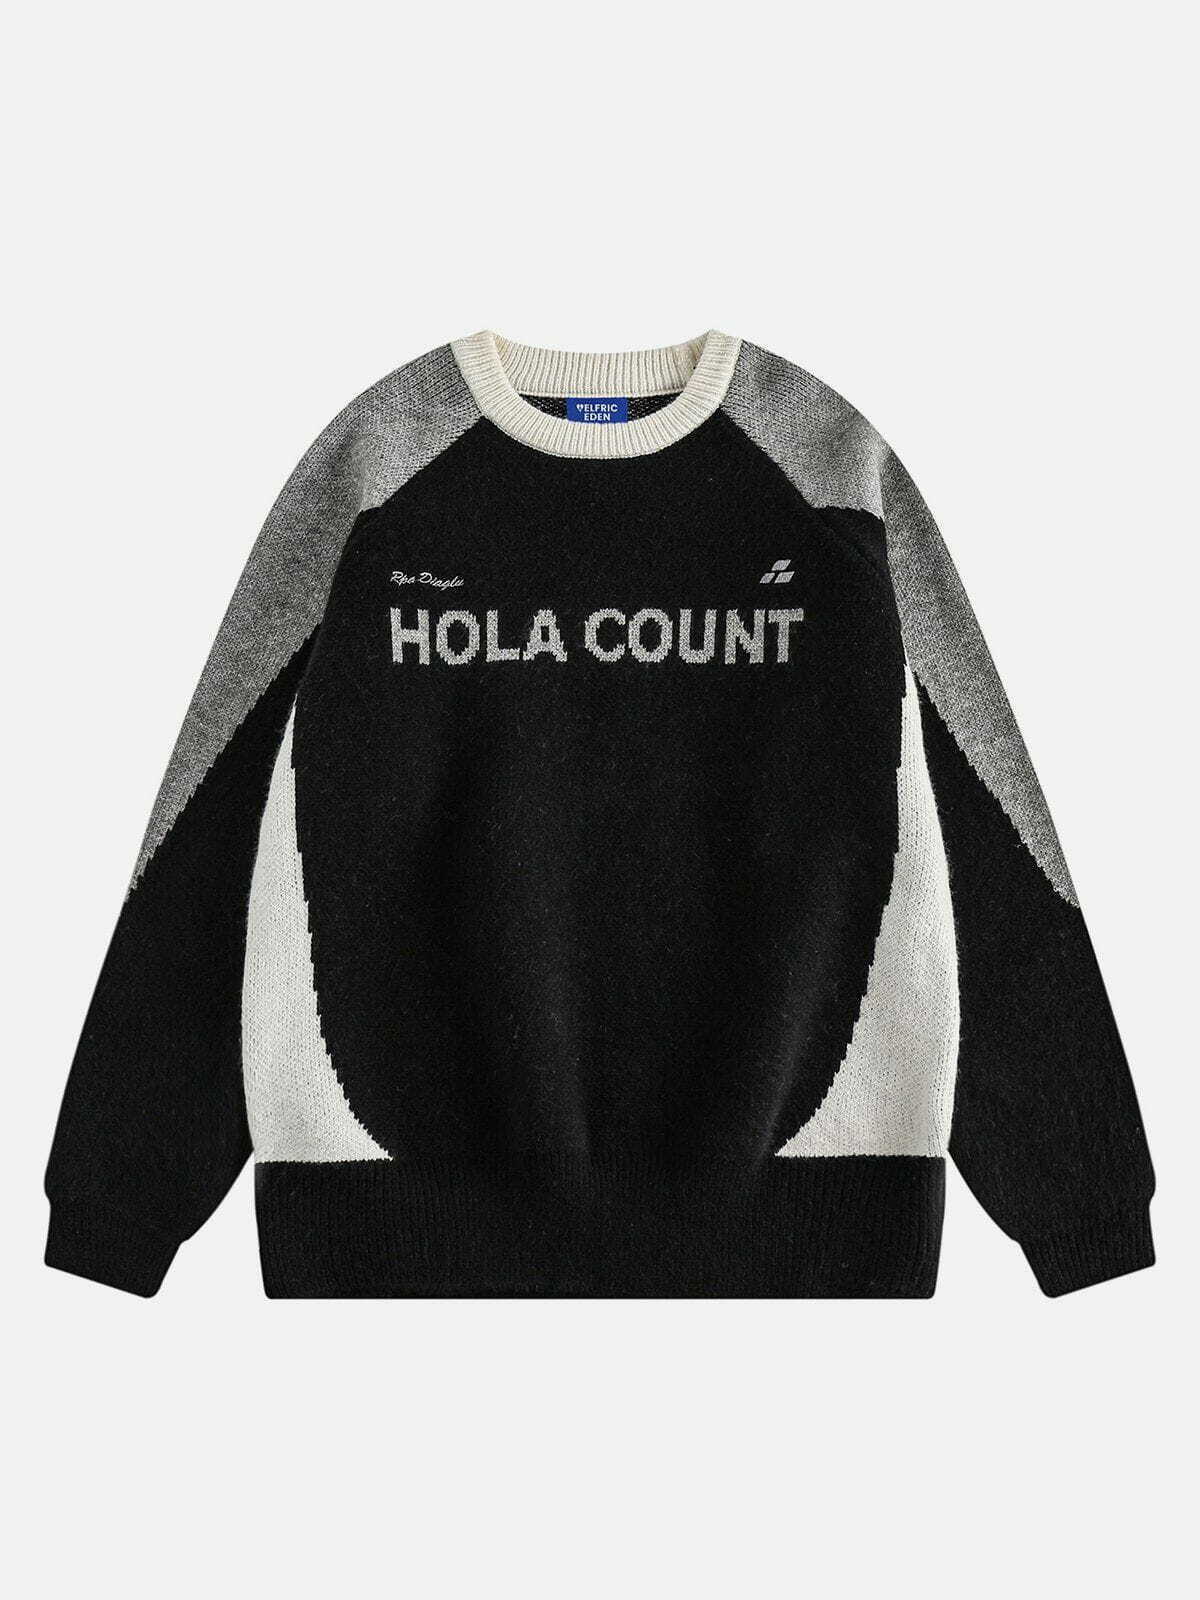 bold color block sweater   youthful & trendy streetwear 6392